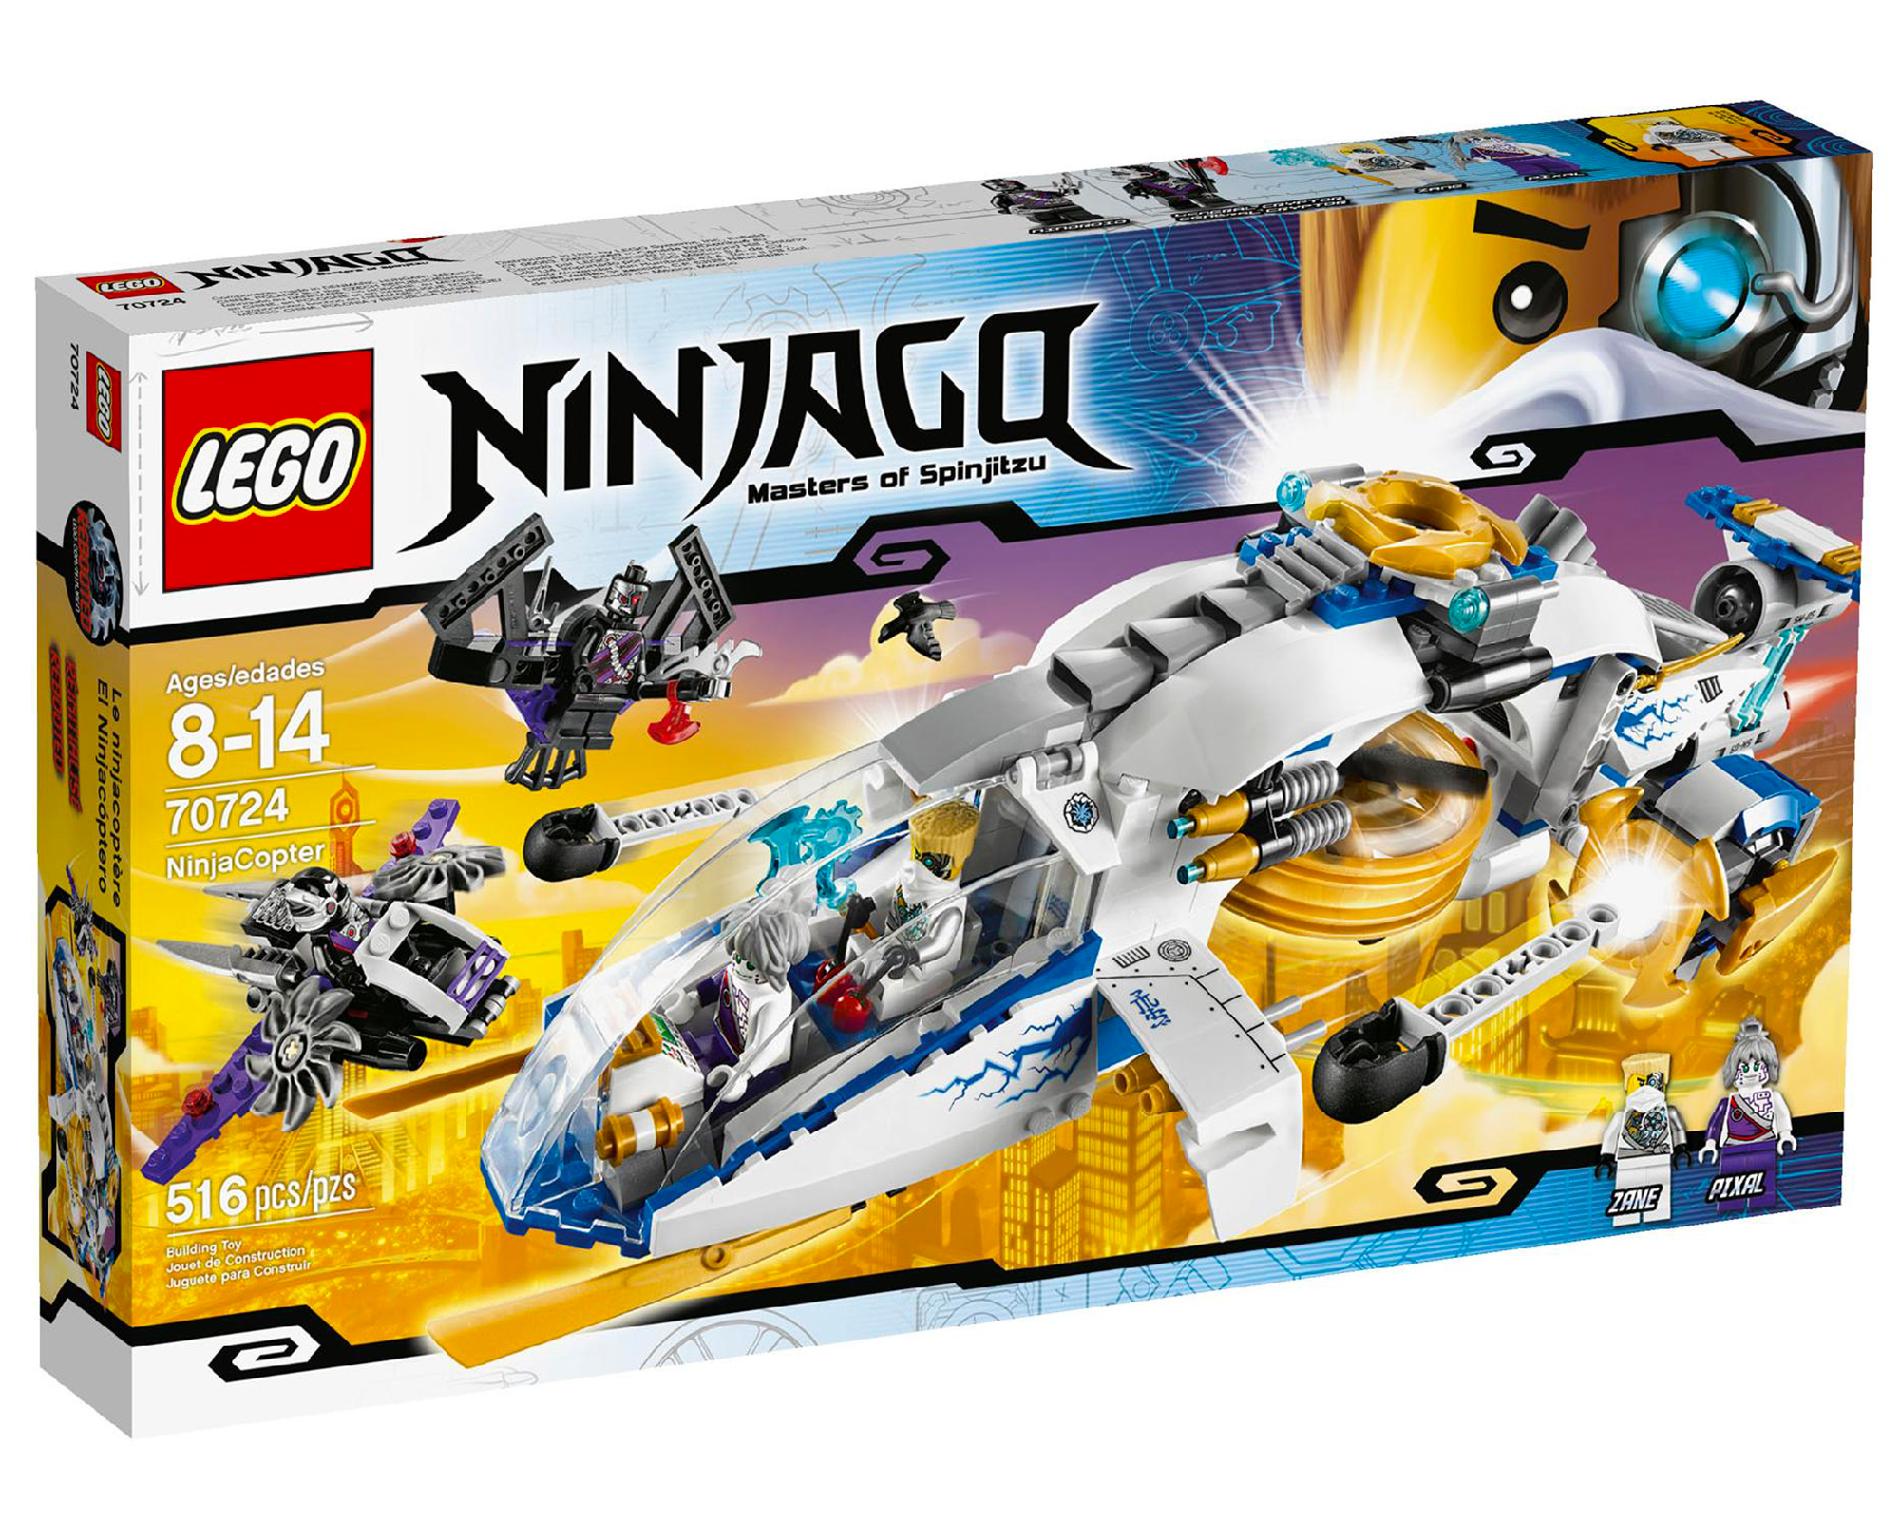 LEGO NINJAGO™ NinjaCopter #70724 - Toys & Games - Blocks ...